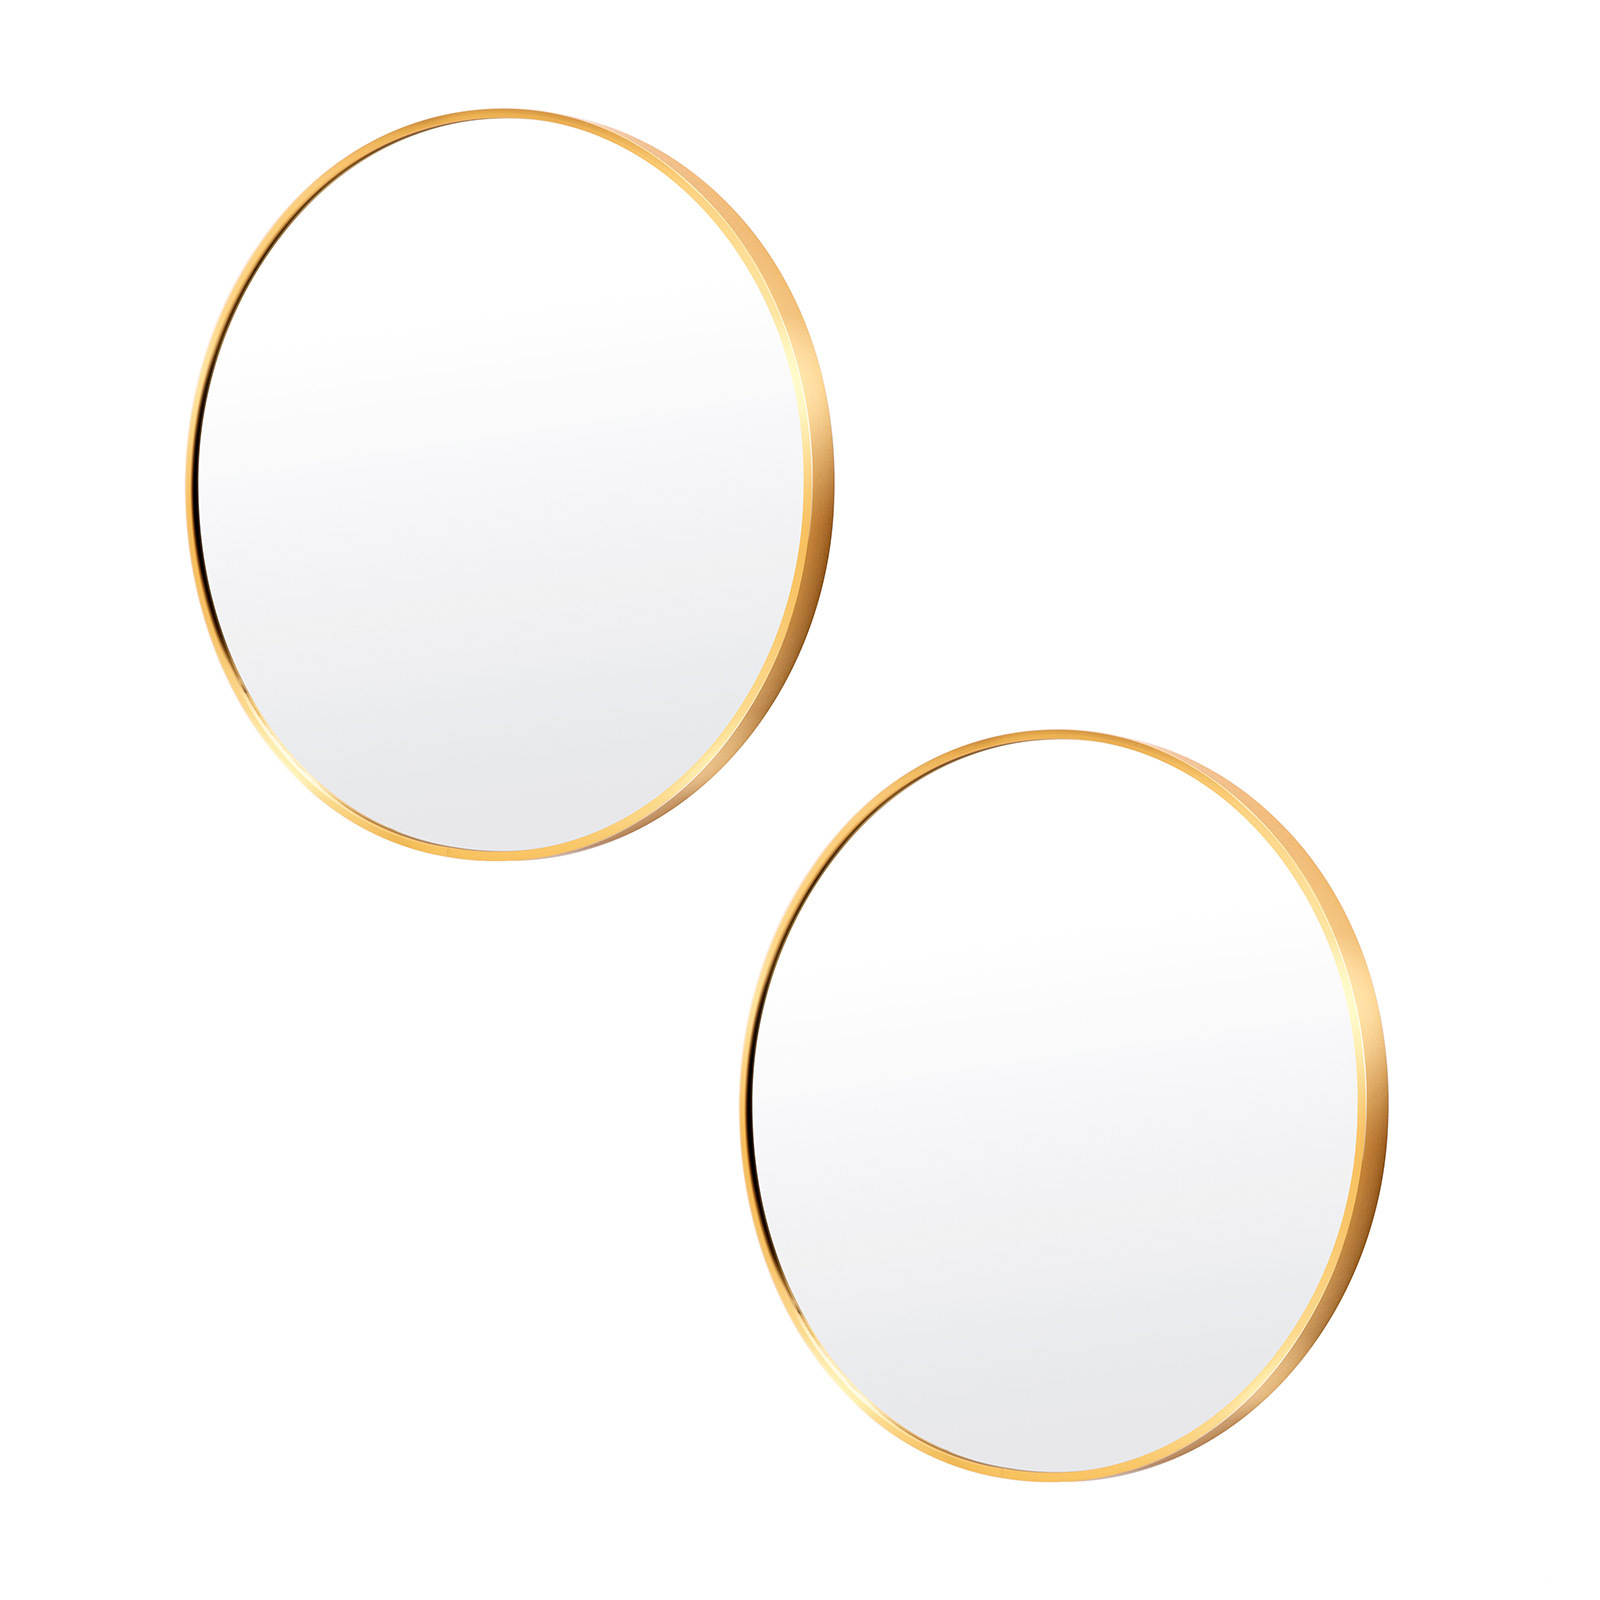 2 Set 50cm Wall Mirror Round Bathroom - GOLD